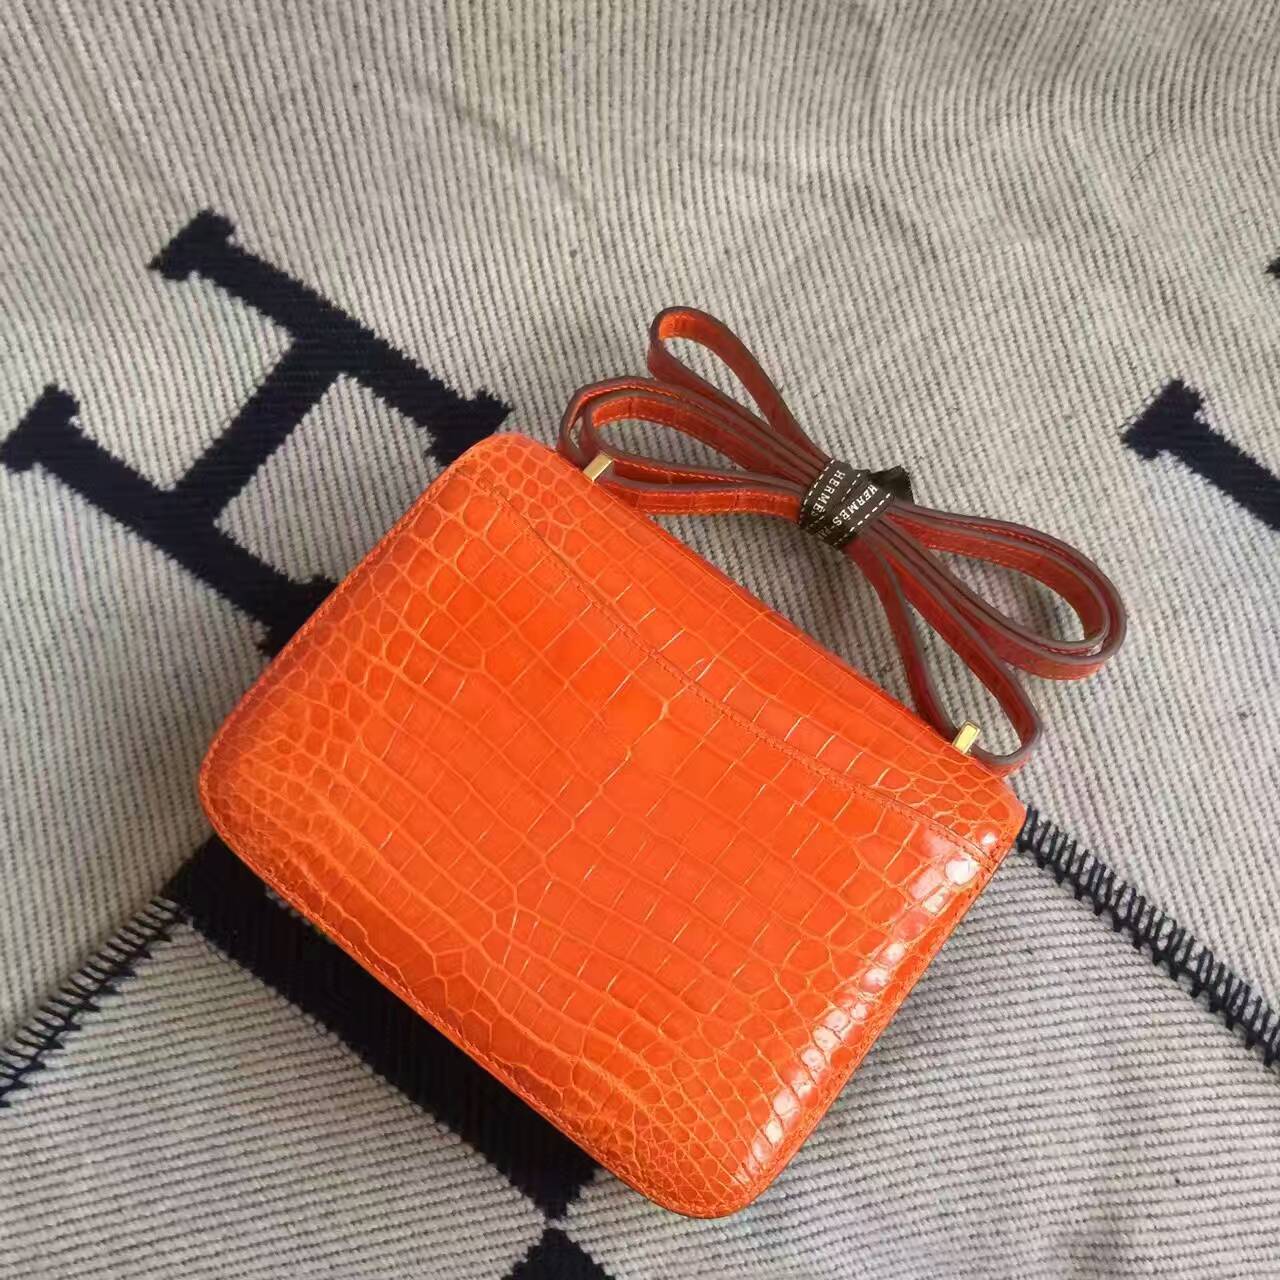 Discount Hermes 93 Orange Crocodile Shiny Leather Constance Bag 19cm